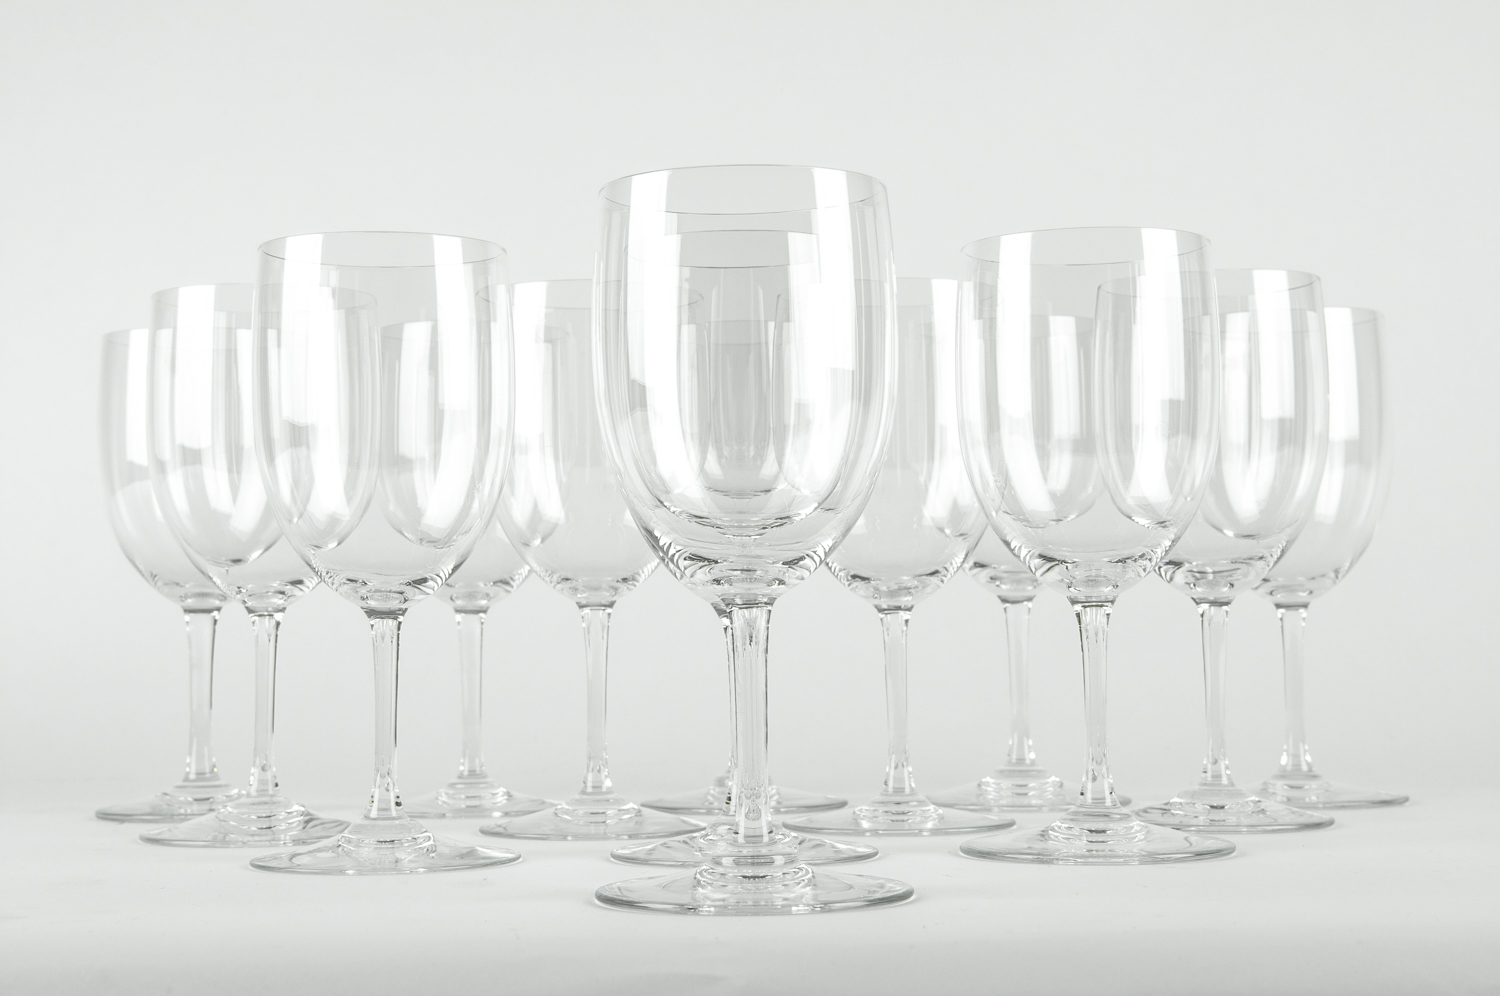 Vintage Baccarat Crystal Wine Glasses. — La Maison Supreme Ltd.